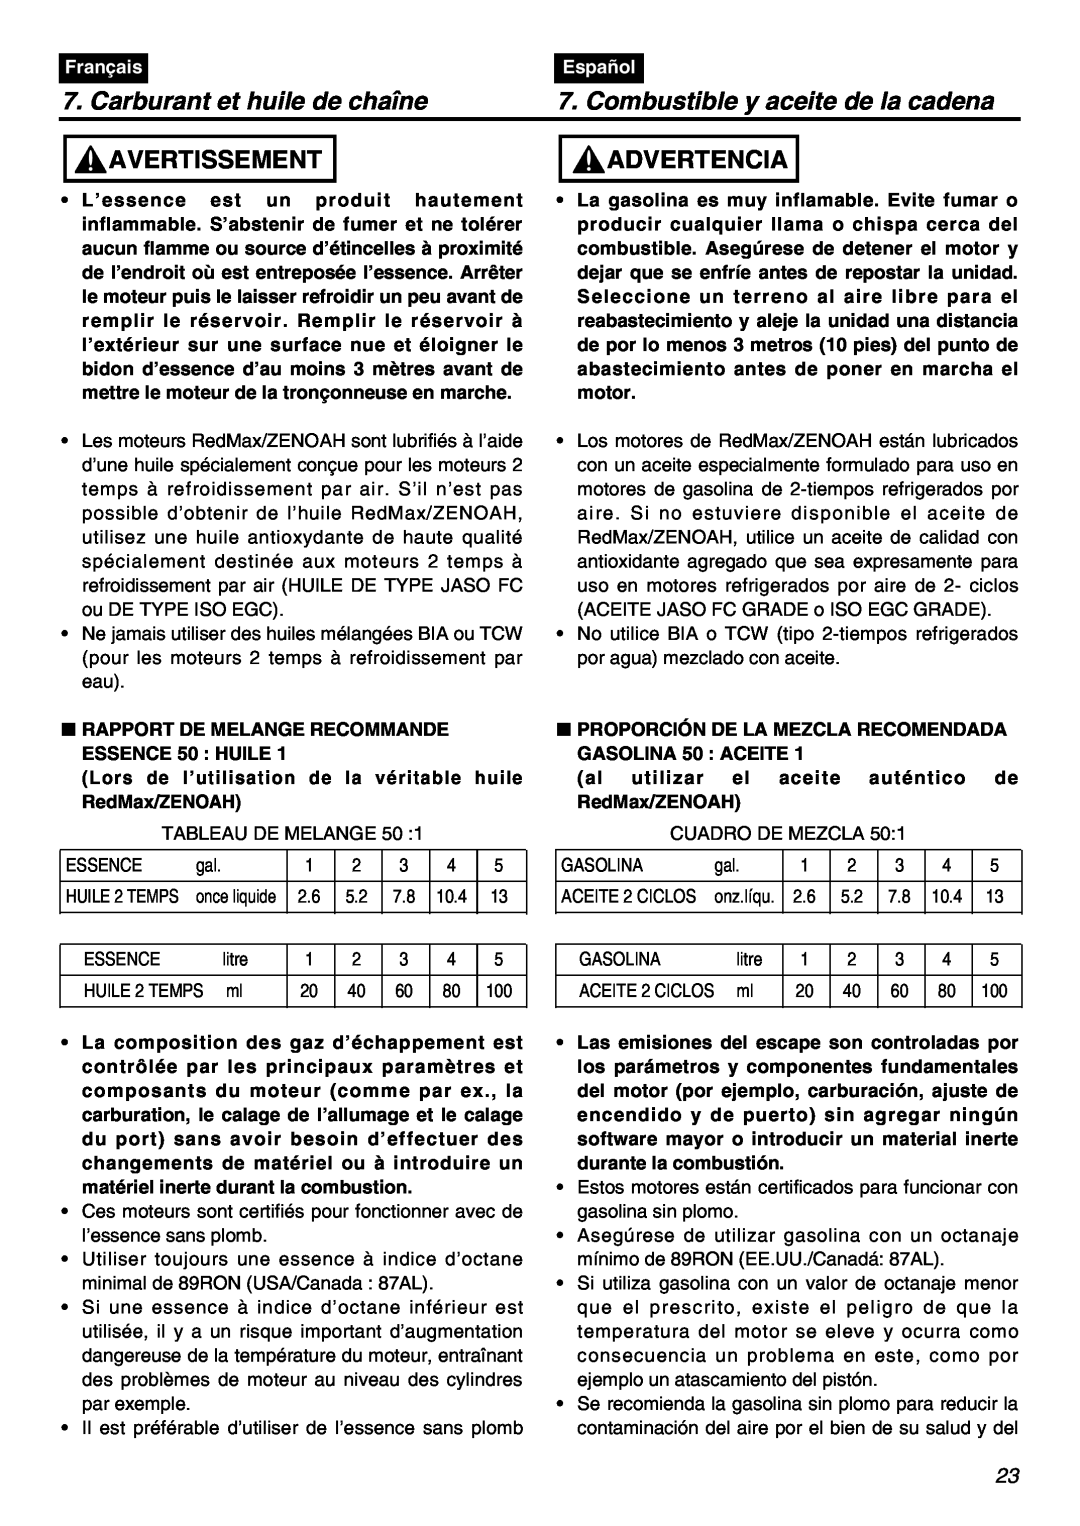 RedMax GZ400 manual Carburant et huile de chaîne, Combustible y aceite de la cadena, Avertissement, Advertencia, Français 